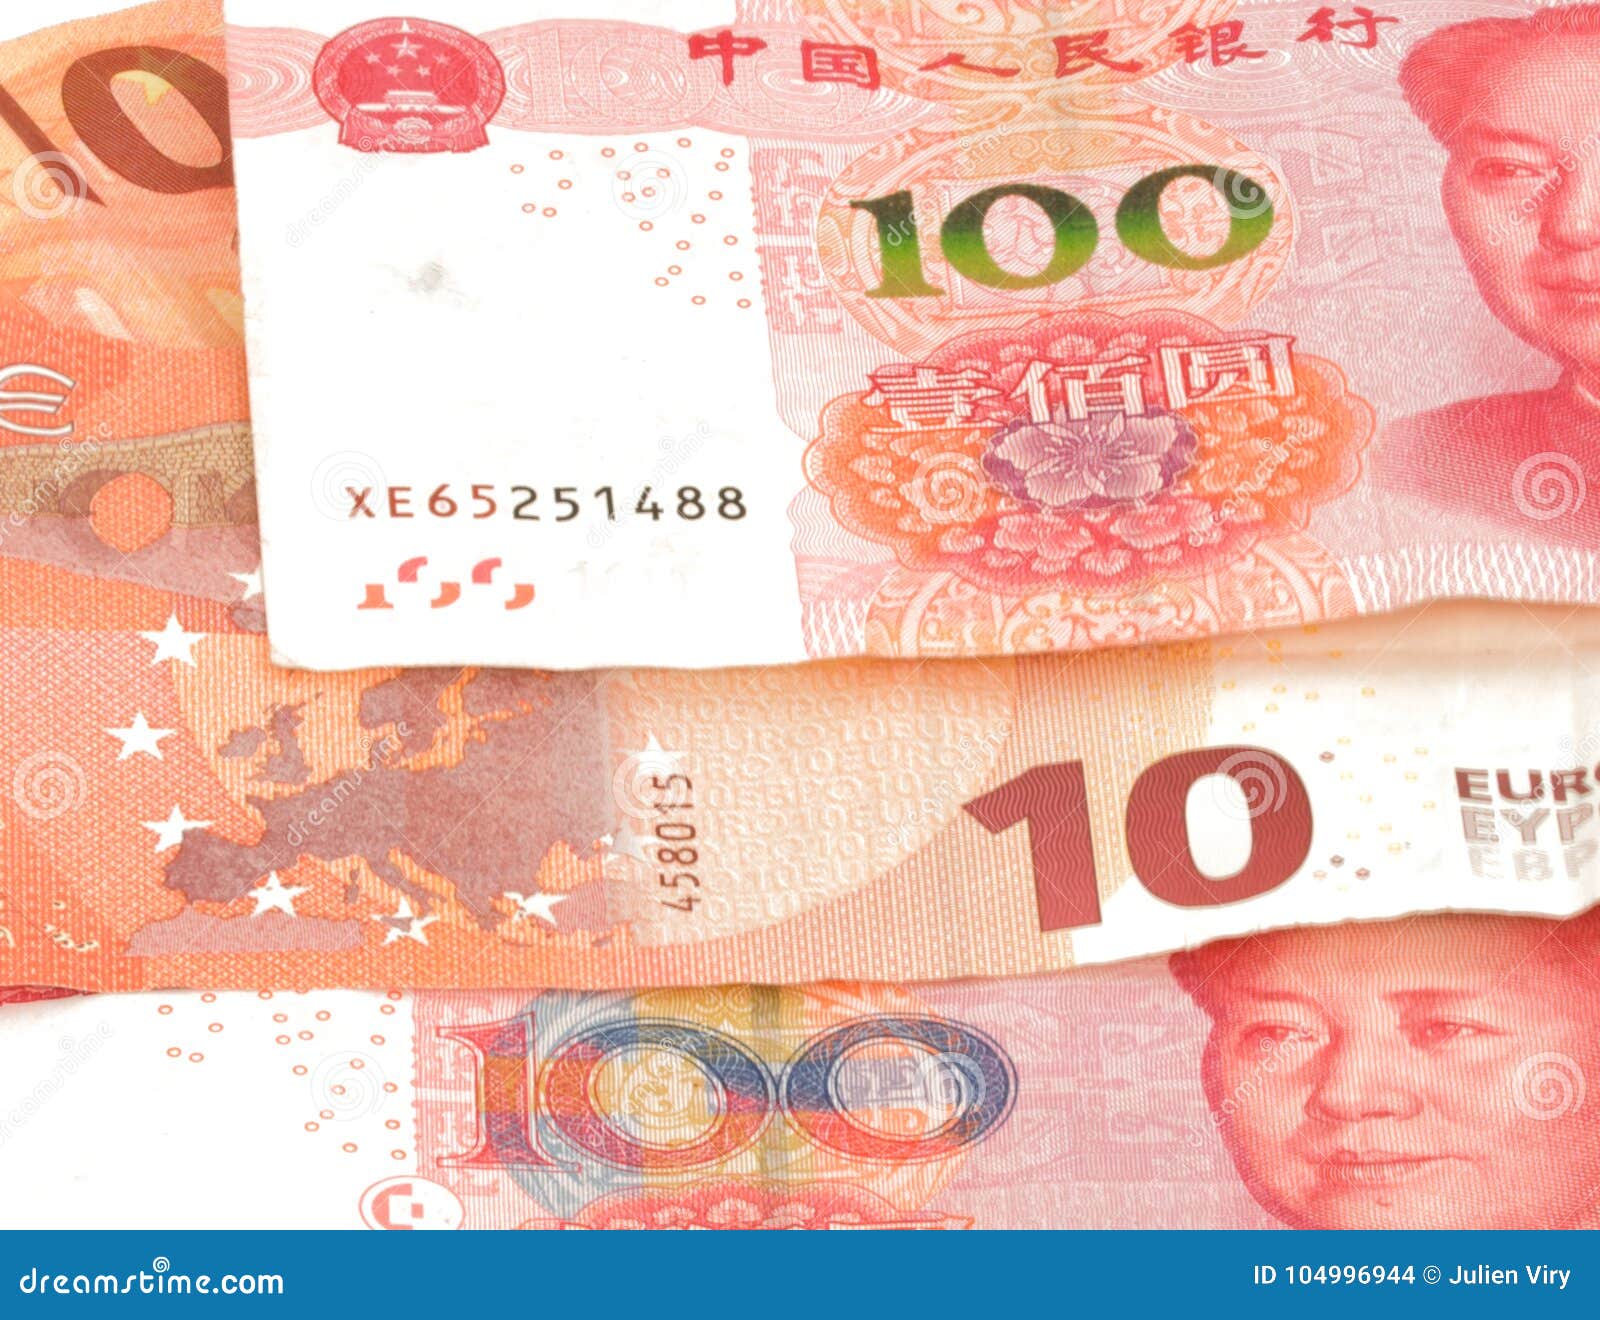 Rmb to rub. CNY или RMB. RMB что за валюта. RMB in CHF. 88888 RMB to USD.